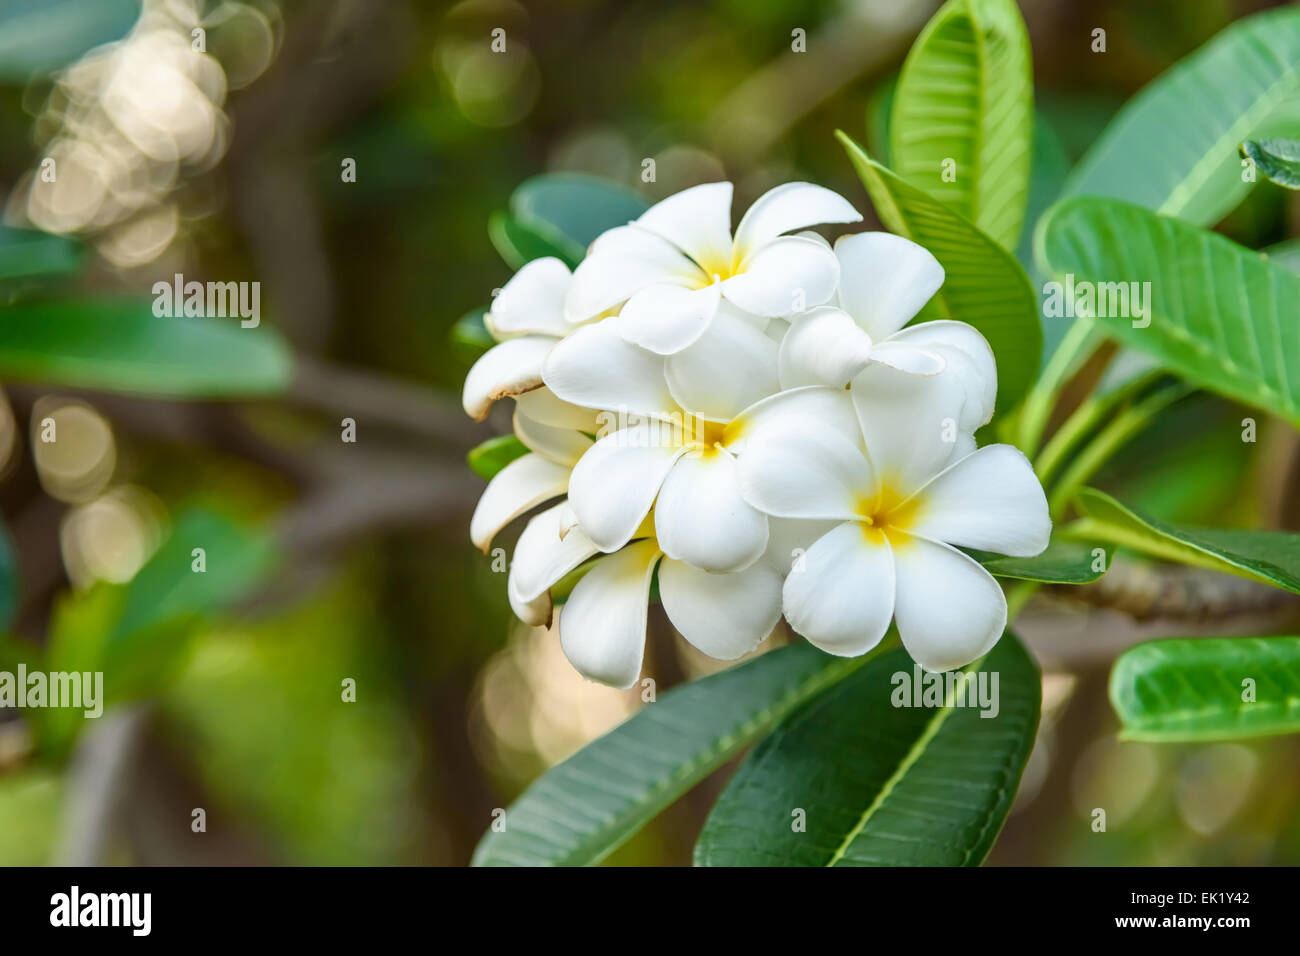 Beautiful White and yellow Frangipani flowers, Apocynaceae Family Stock Photo